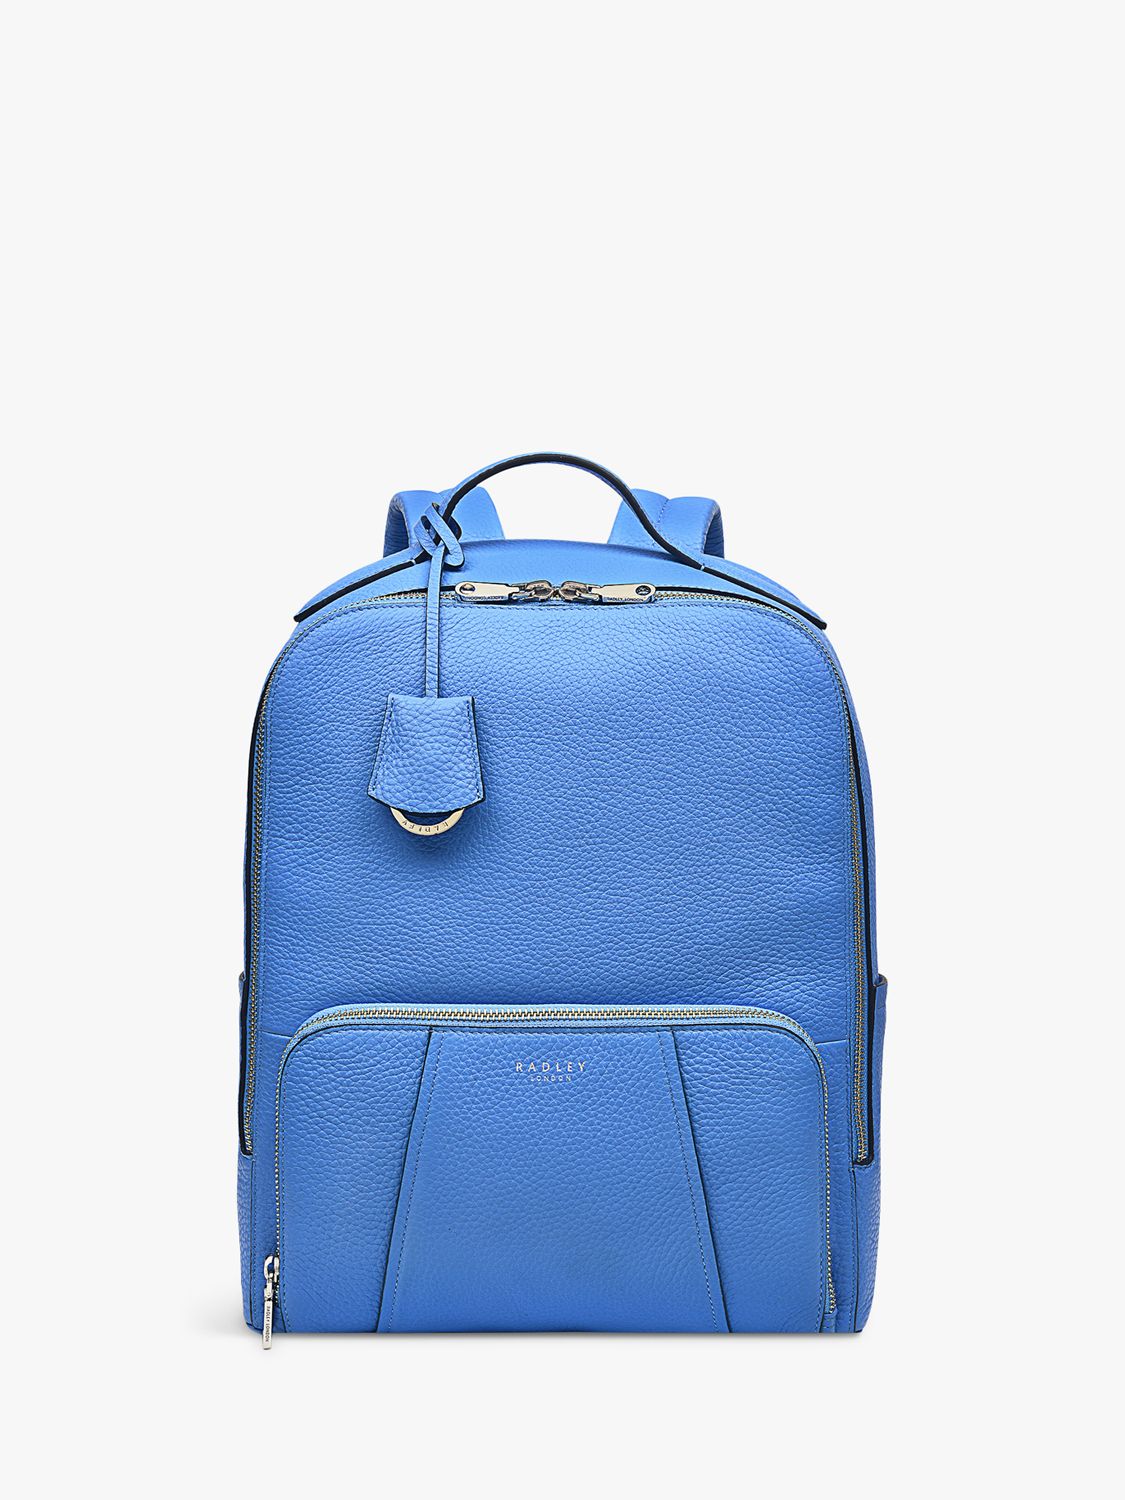 Radley Wood Street 2.0 Medium Backpack, Tranquil Blue, One Size